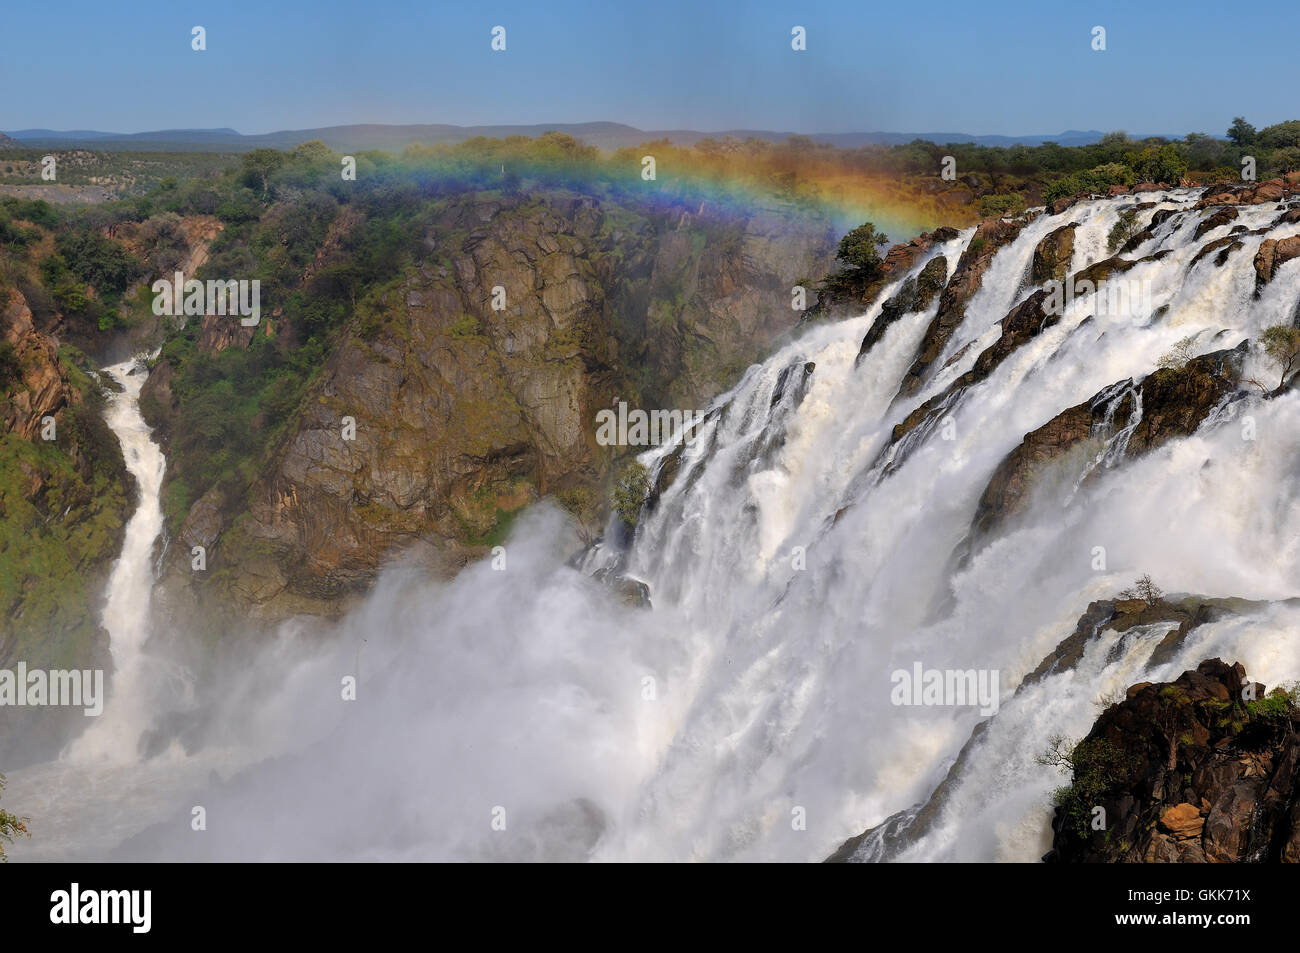 The Ruacana waterfalls, Namibia Stock Photo